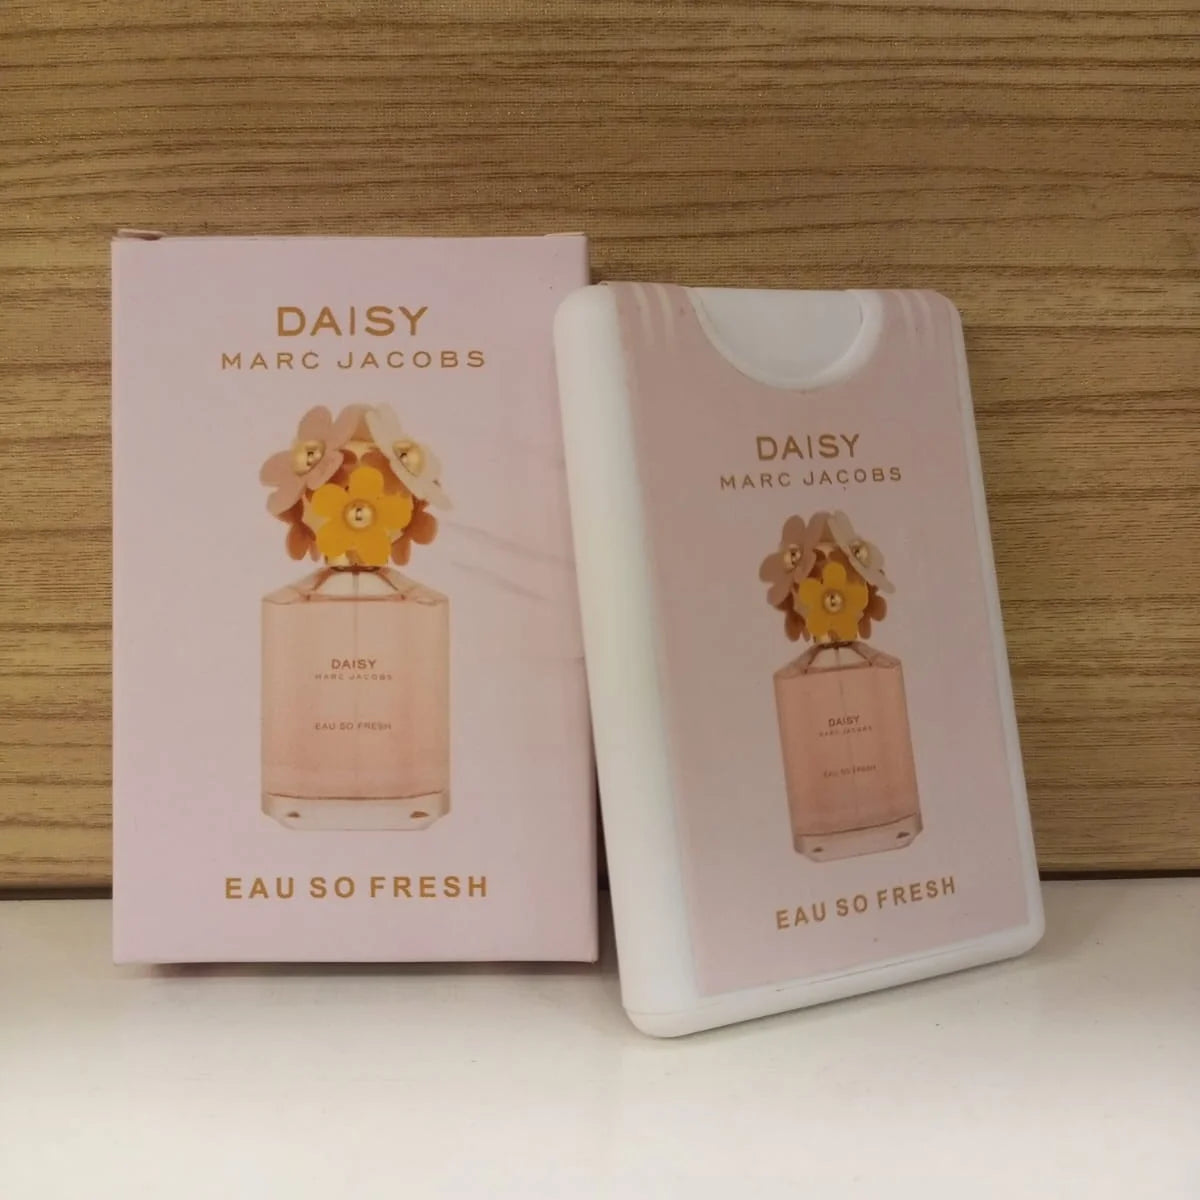 Marc Jacobs Daisy EAU So Fresh Perfume